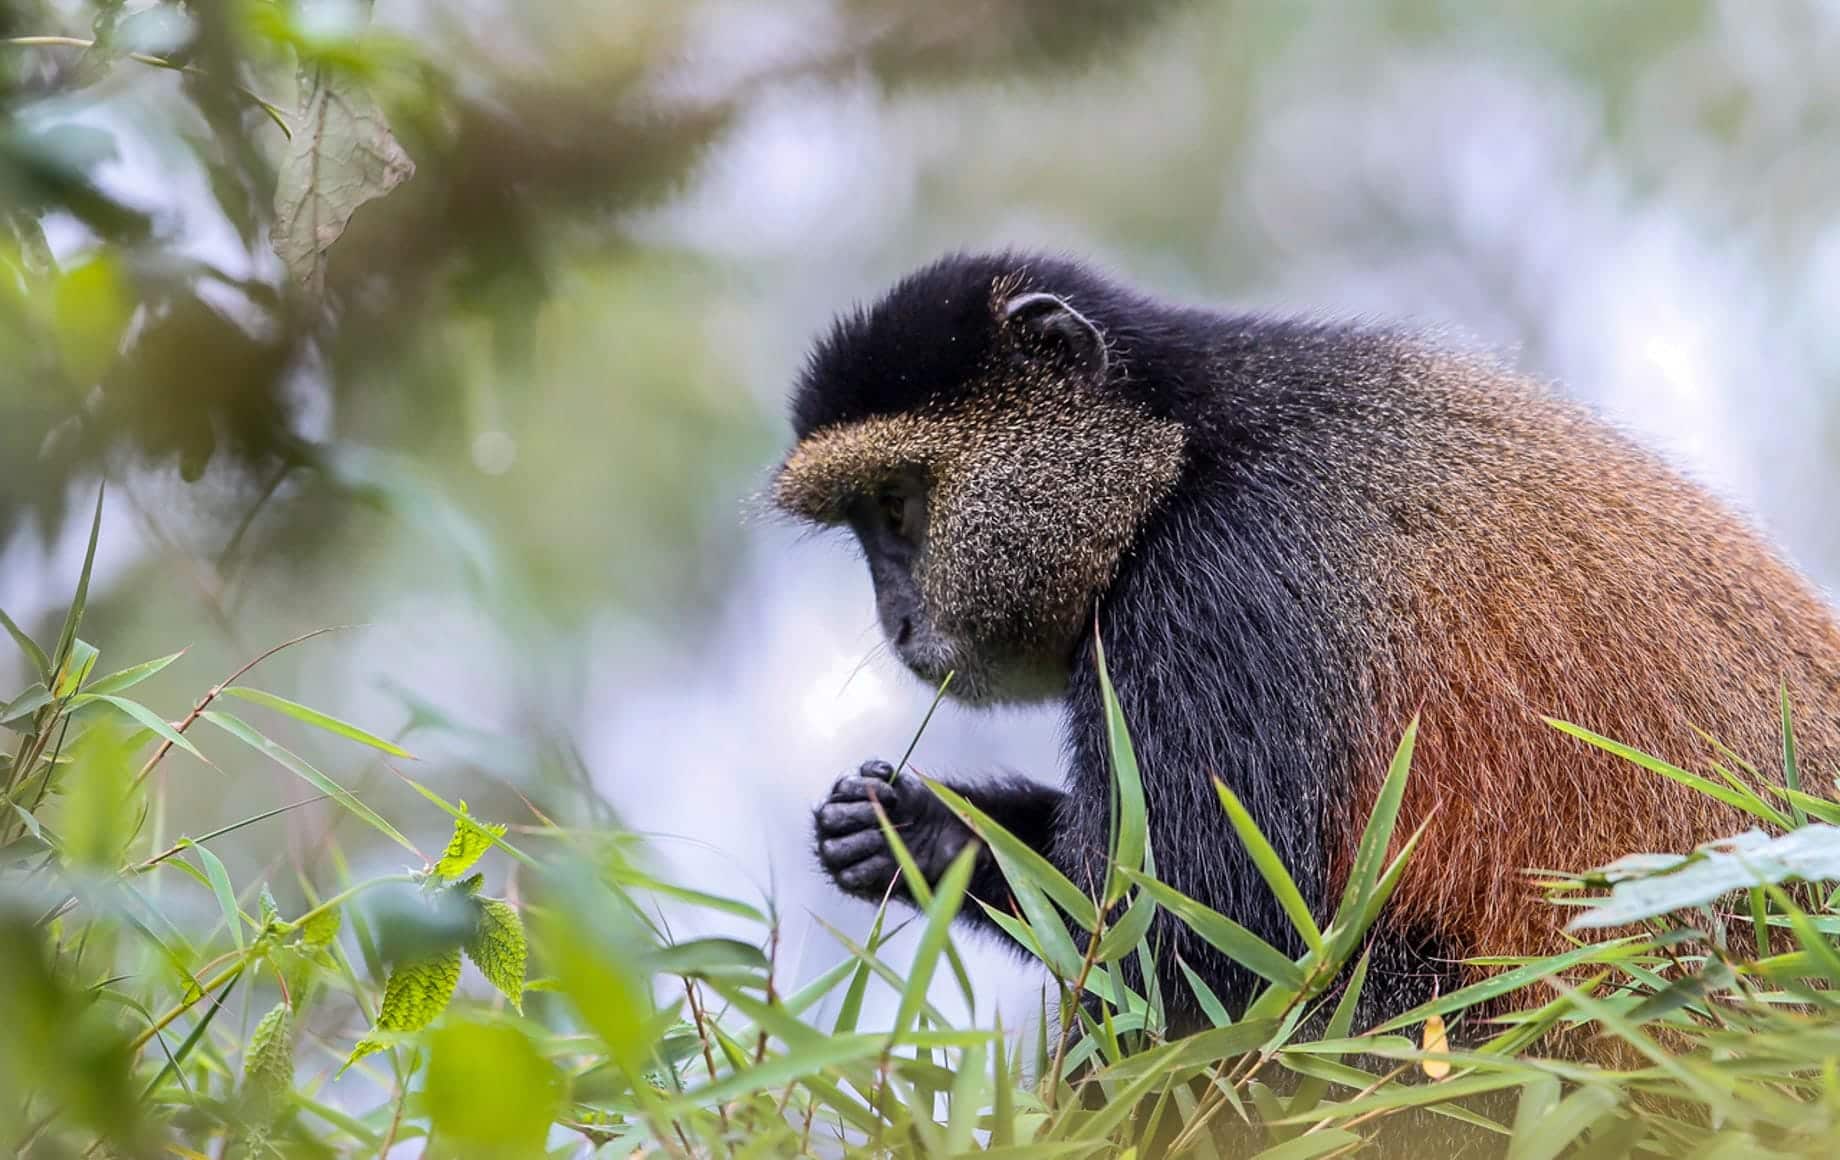 Monkey eating grass at Volcanoes National Park, Rwanda